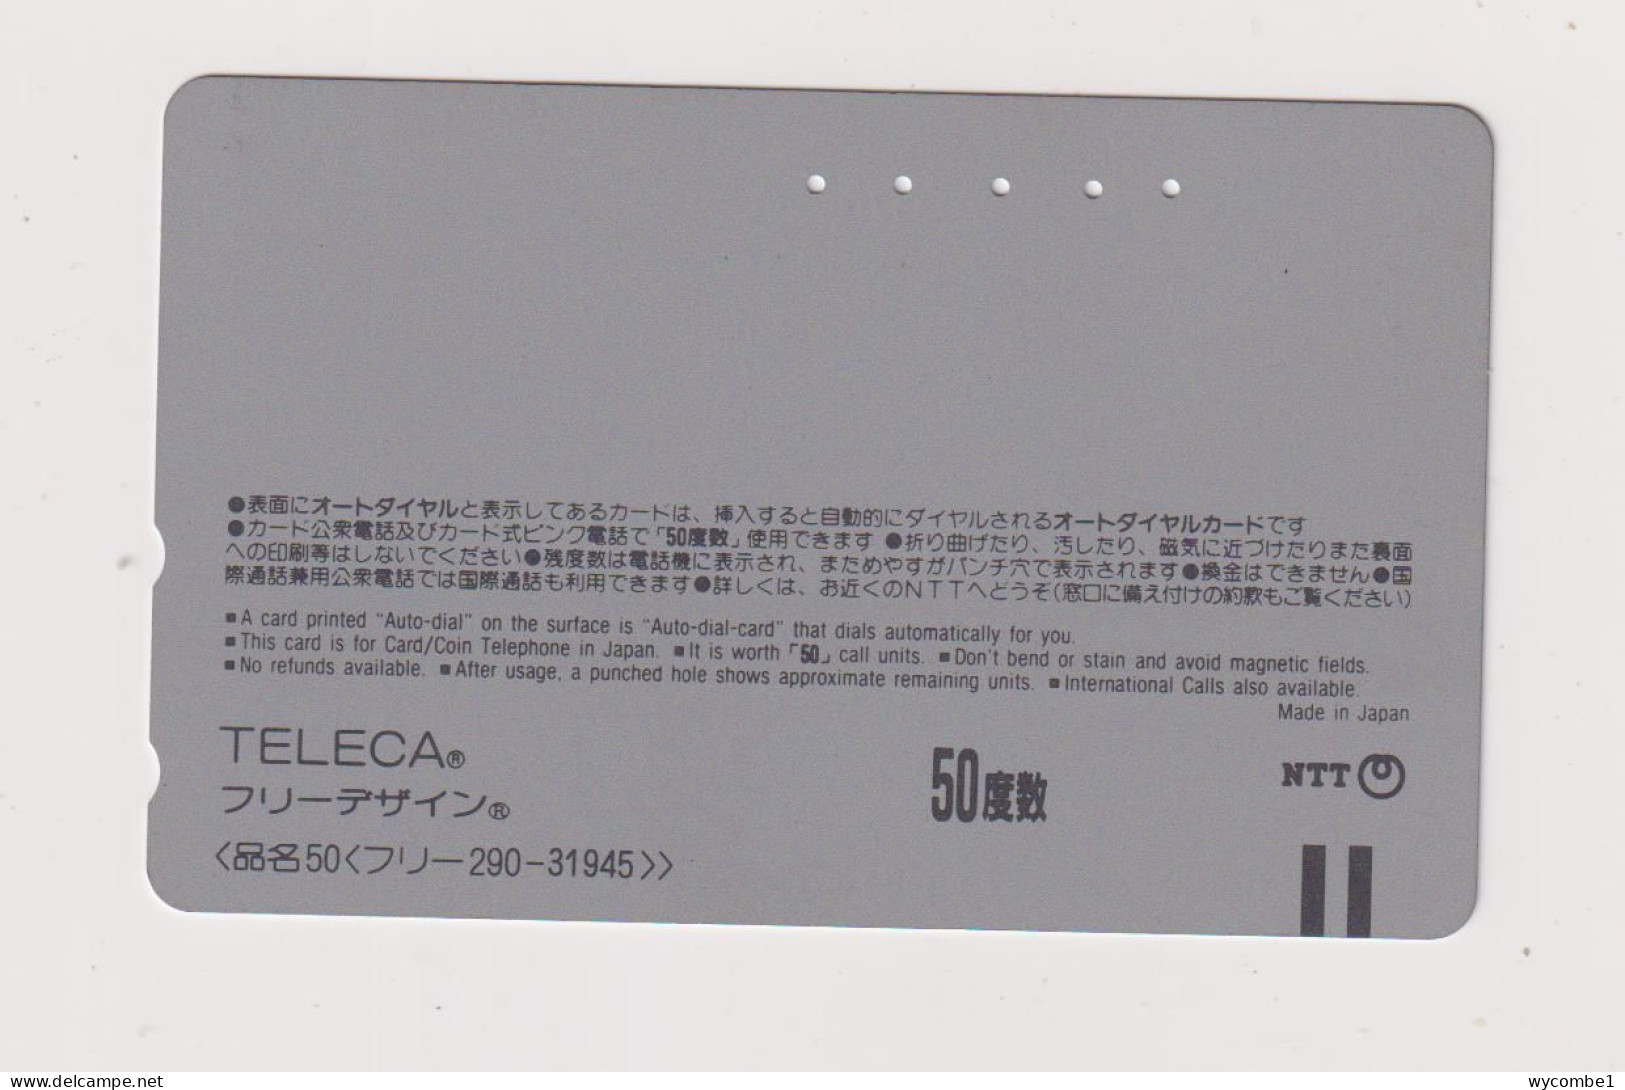 JAPAN  - Heavy Duty Crane Magnetic Phonecard - Giappone